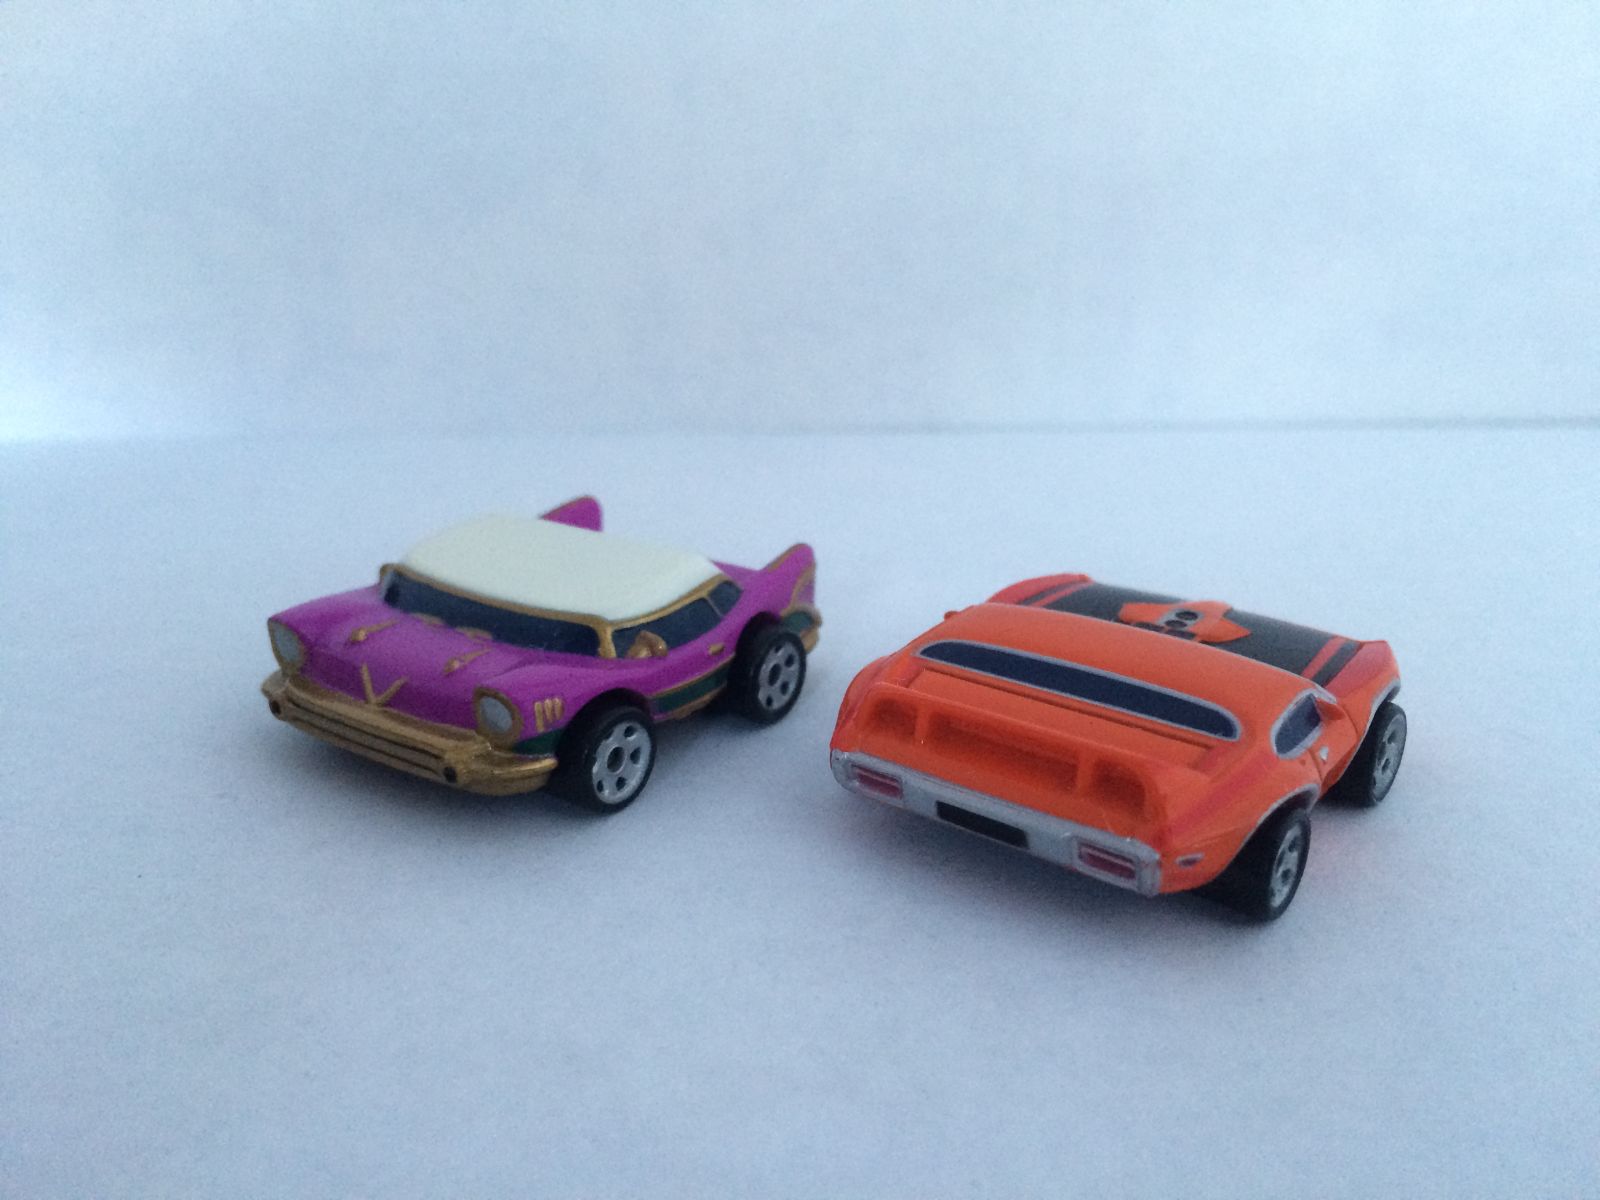 Chevy Bel Air and Pontiac GTO